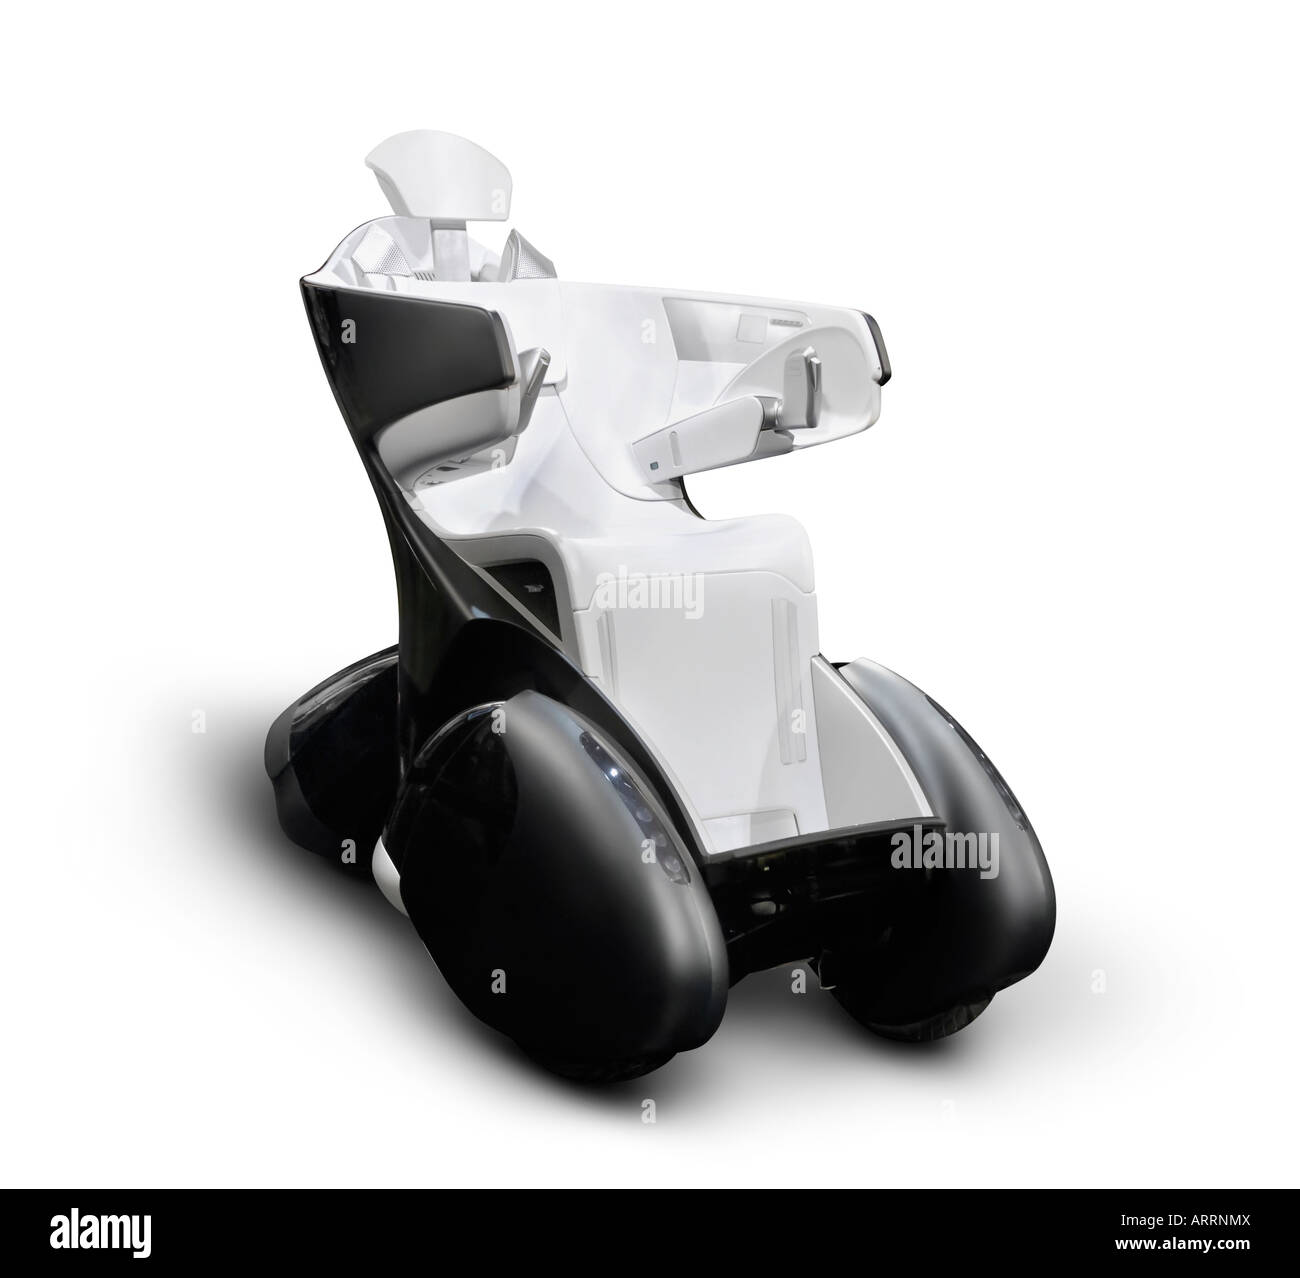 Toyota Motor Corp i-REAL high-tech fauteuil roulant motorisé Banque D'Images